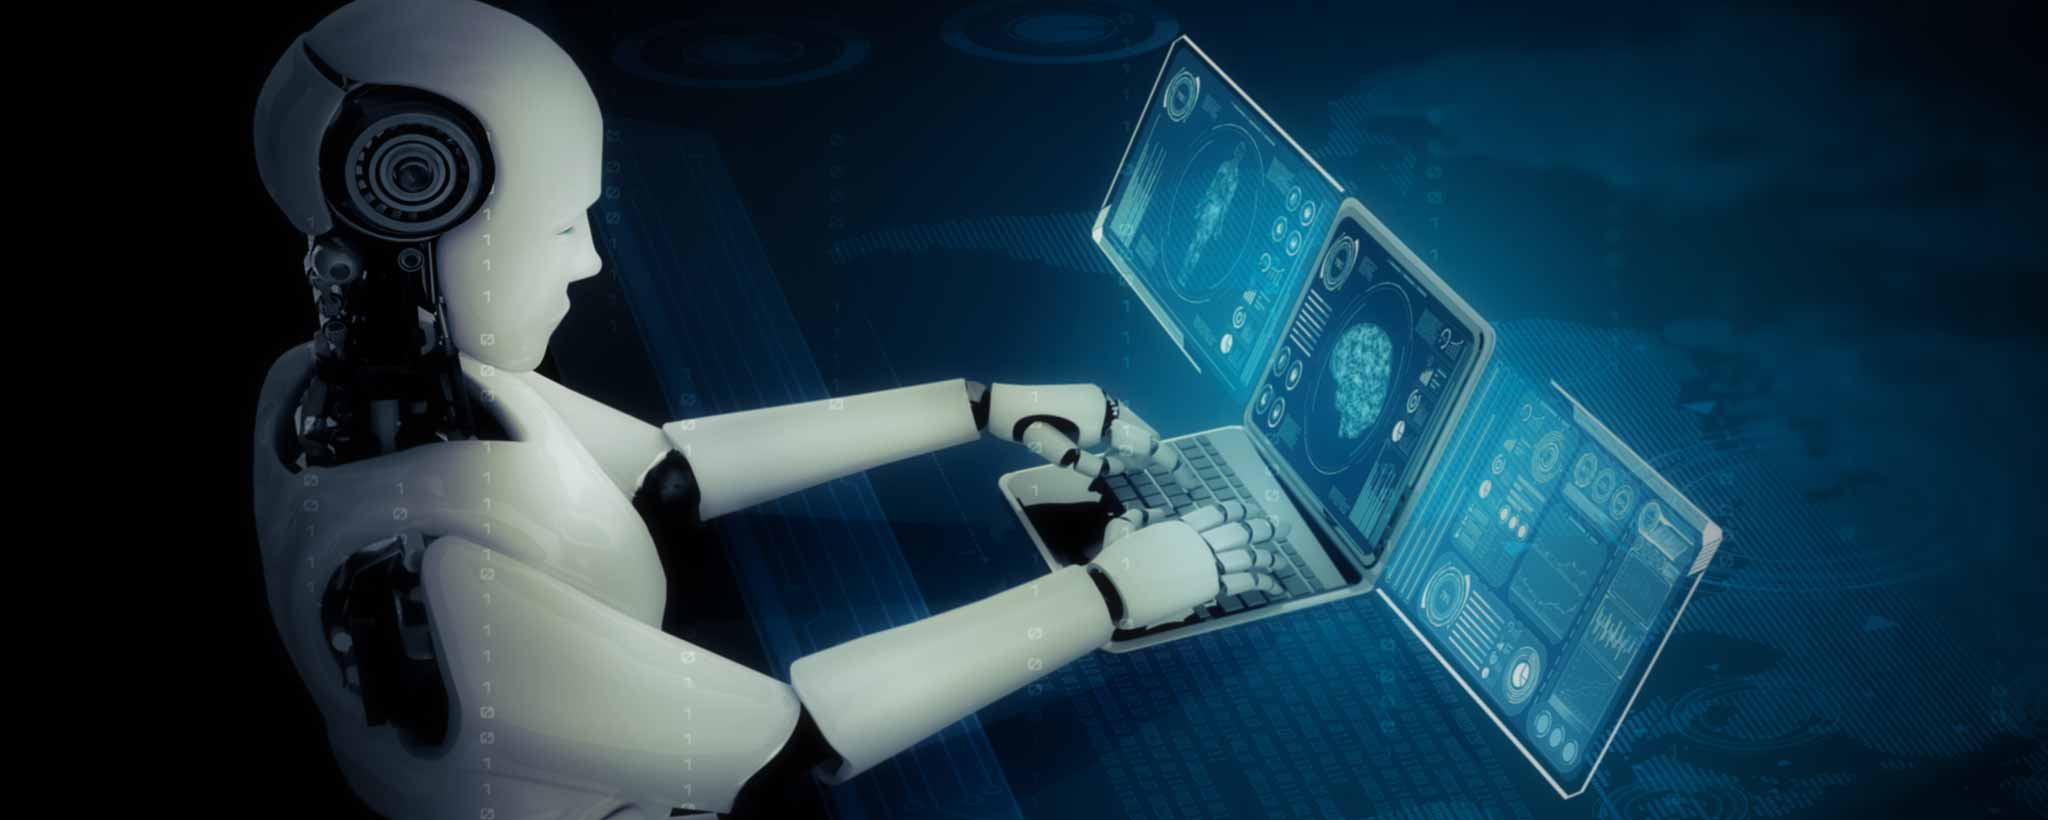 'Robot using computer'